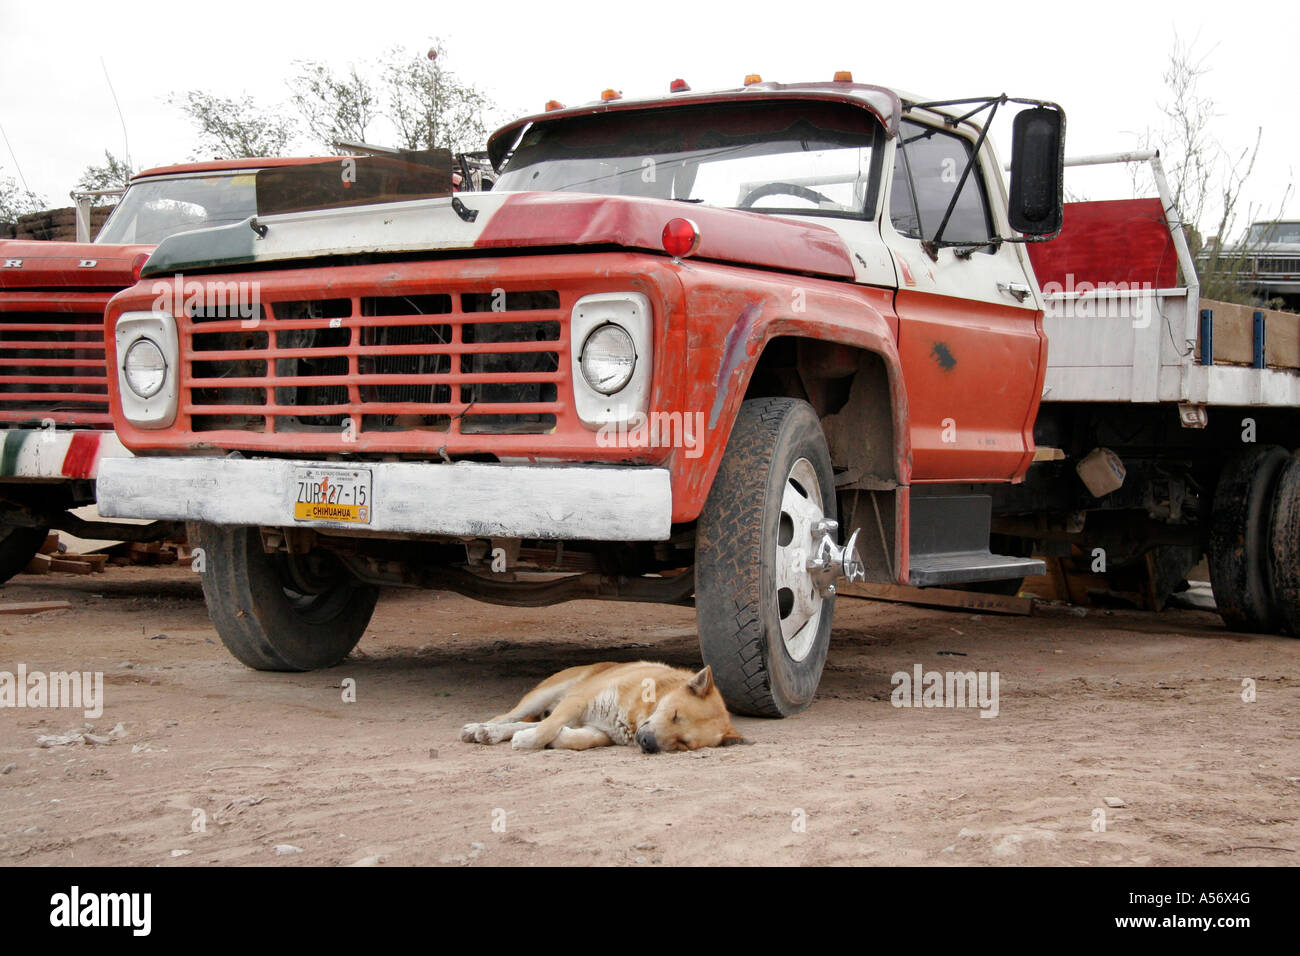 Painet ja1026 Mexiko hispanische Hund schlafen unter LKW-Juarez Chihuahua Foto 2005 Lateinamerika Grenzen 20031001 Land Stockfoto